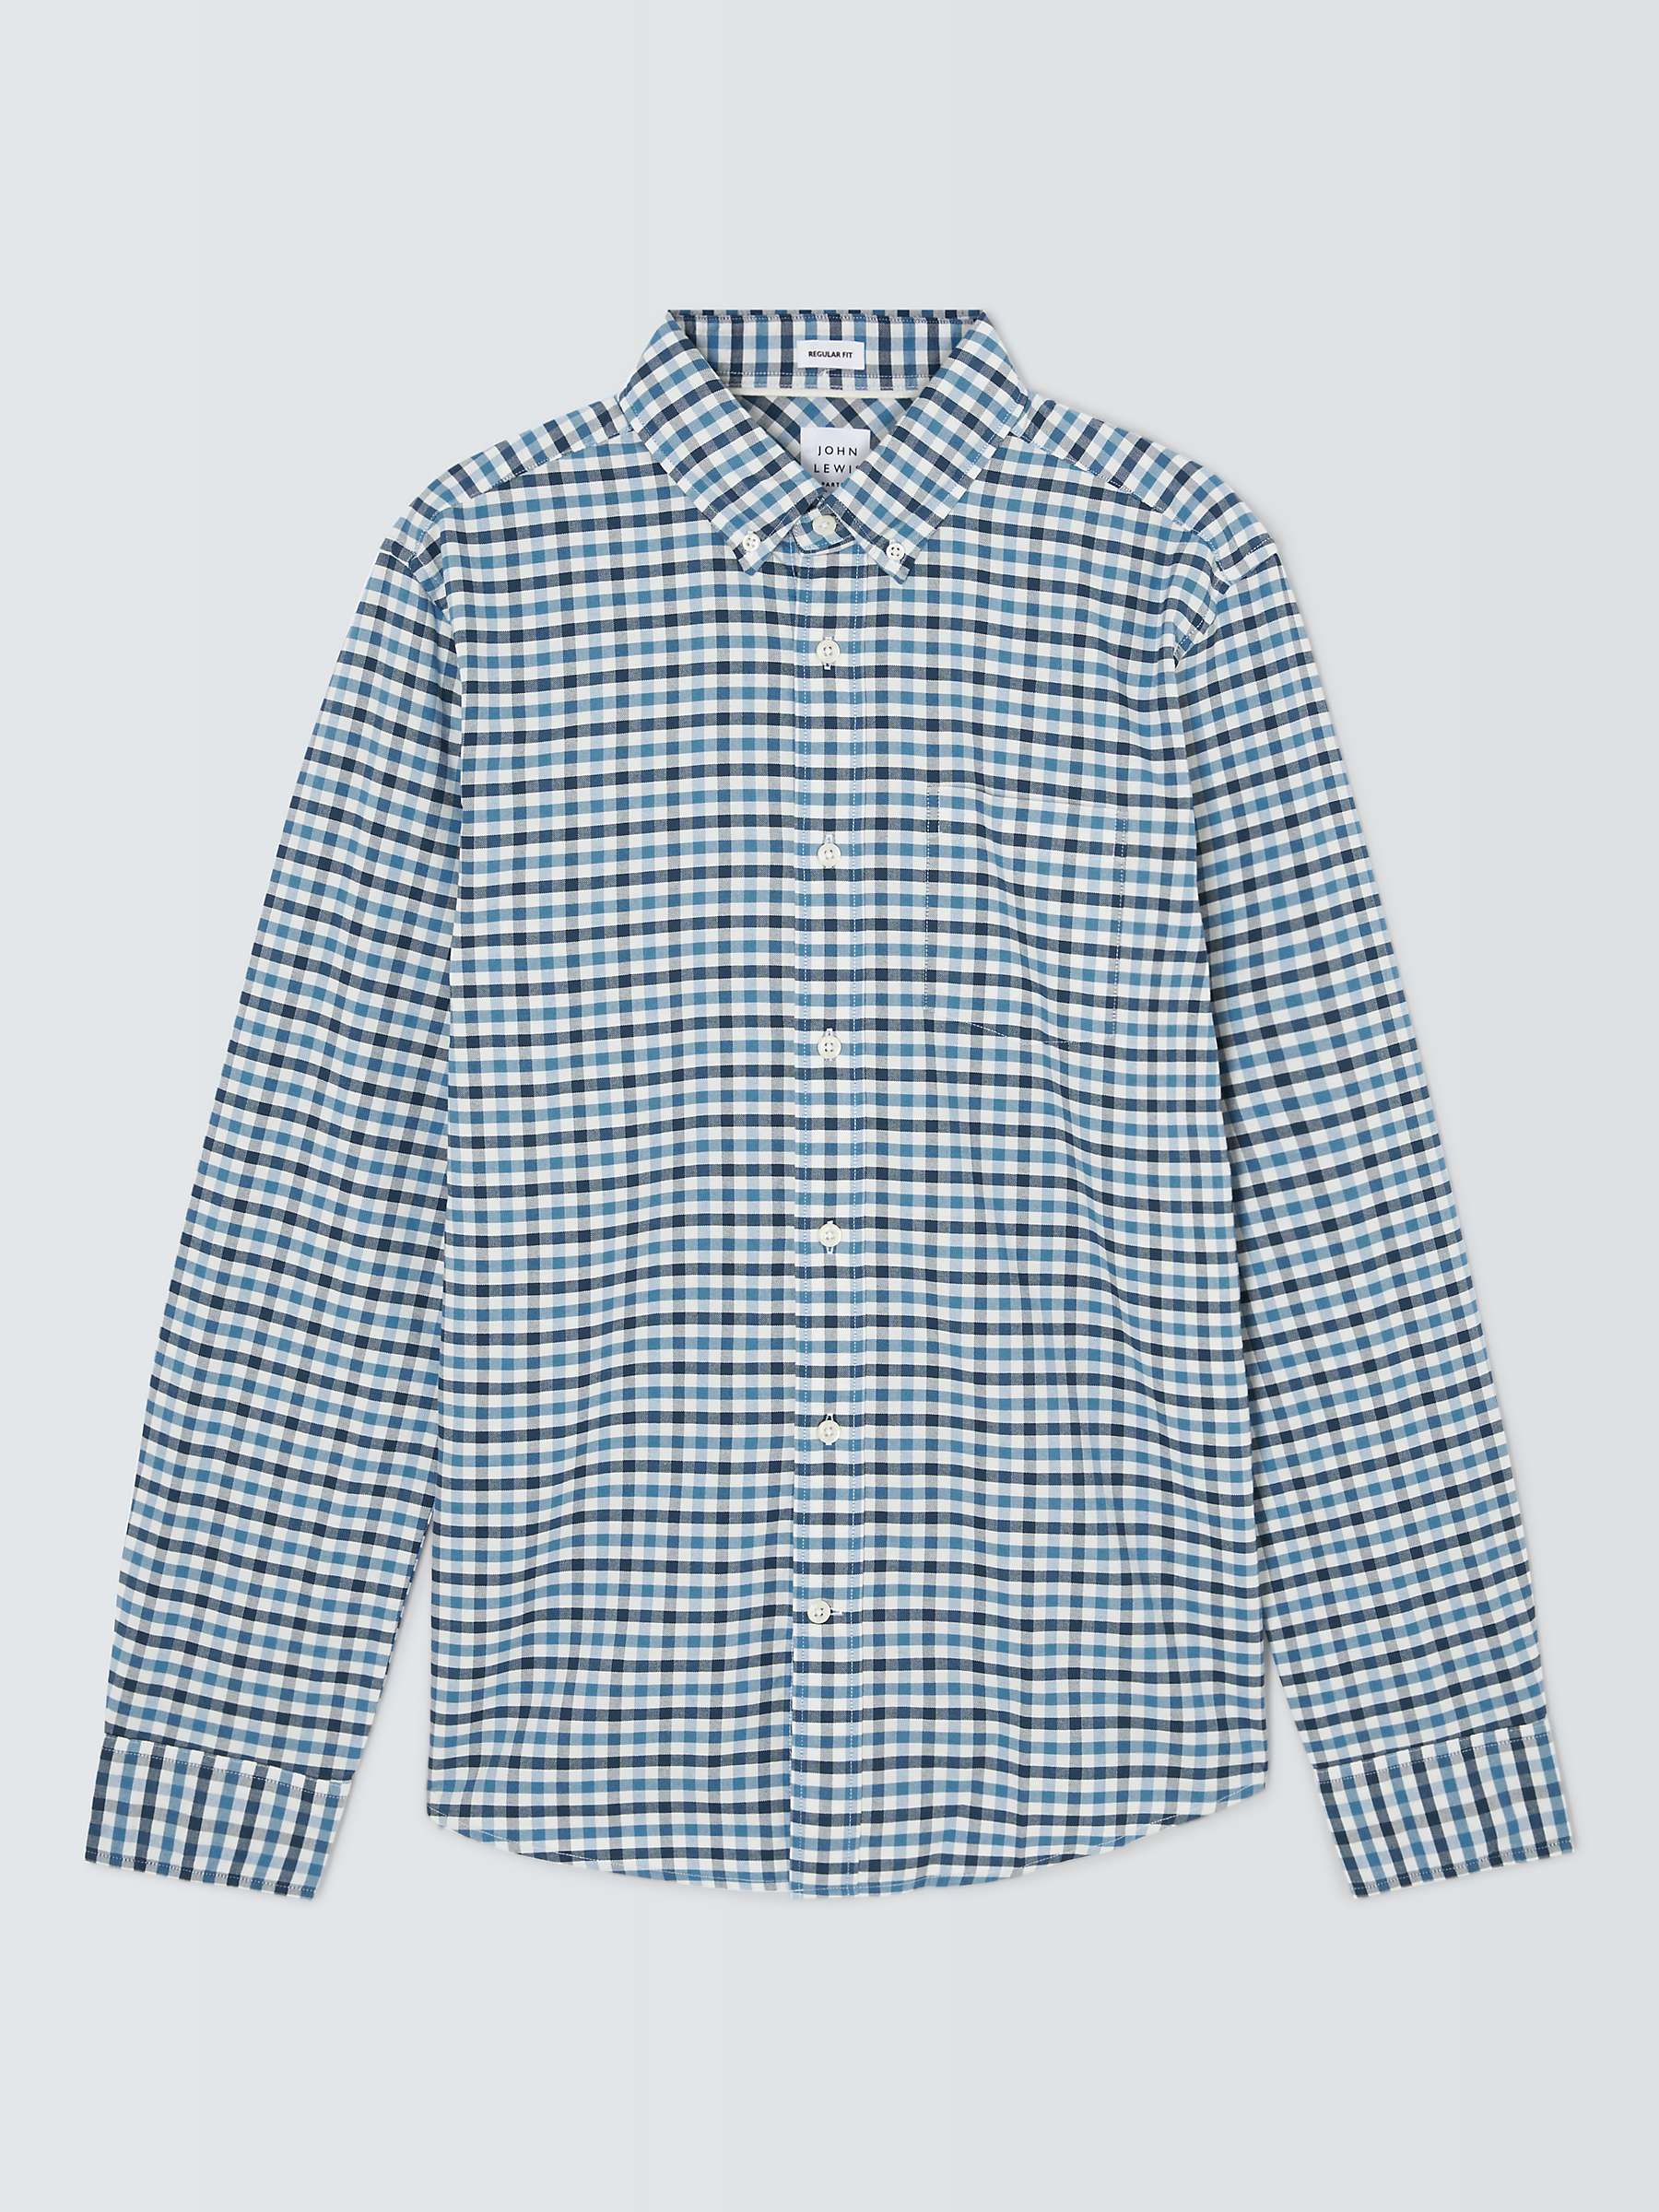 Buy John Lewis Oxford Gingham Long Sleeve Shirt, Blue Online at johnlewis.com